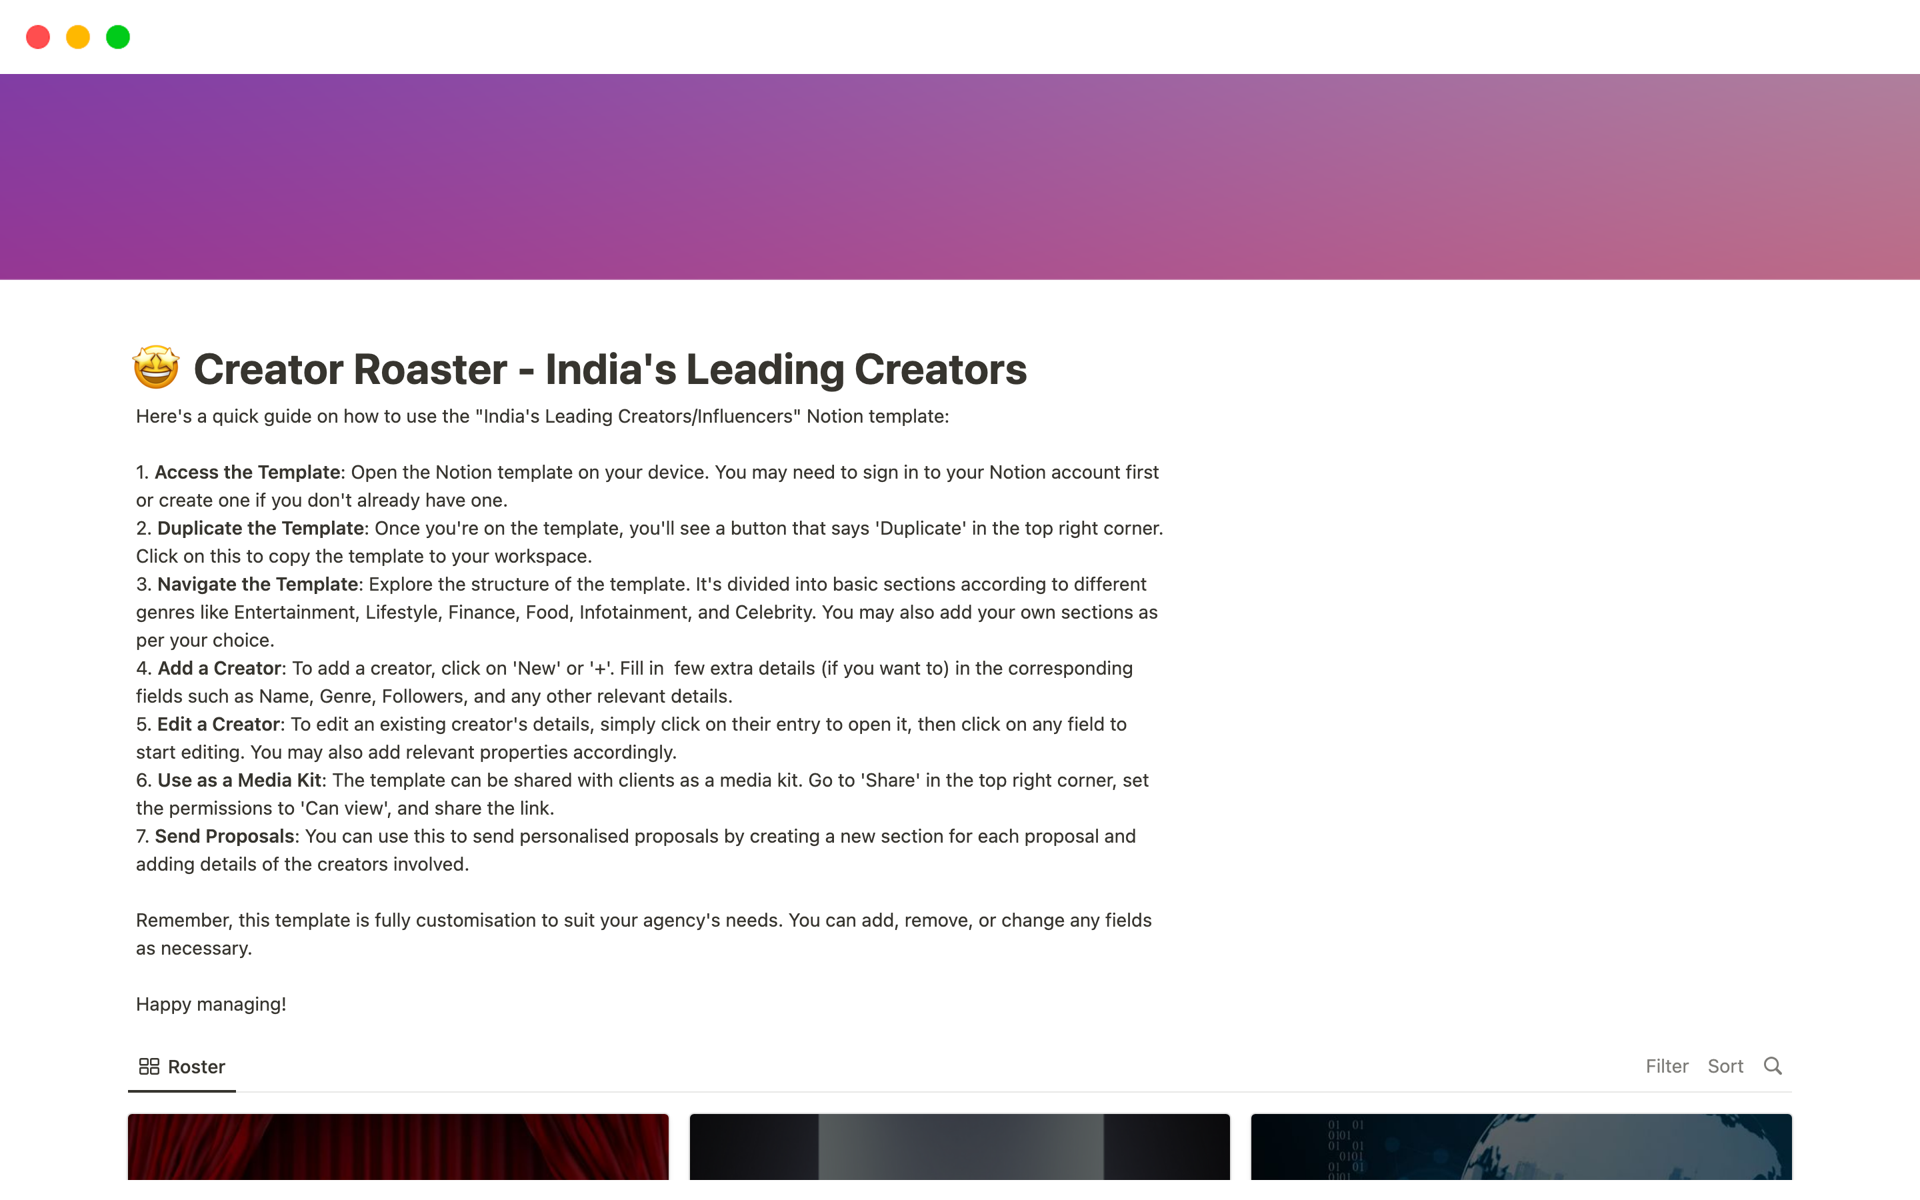 The Creator Roster - India's Leading Creatorsのテンプレートのプレビュー